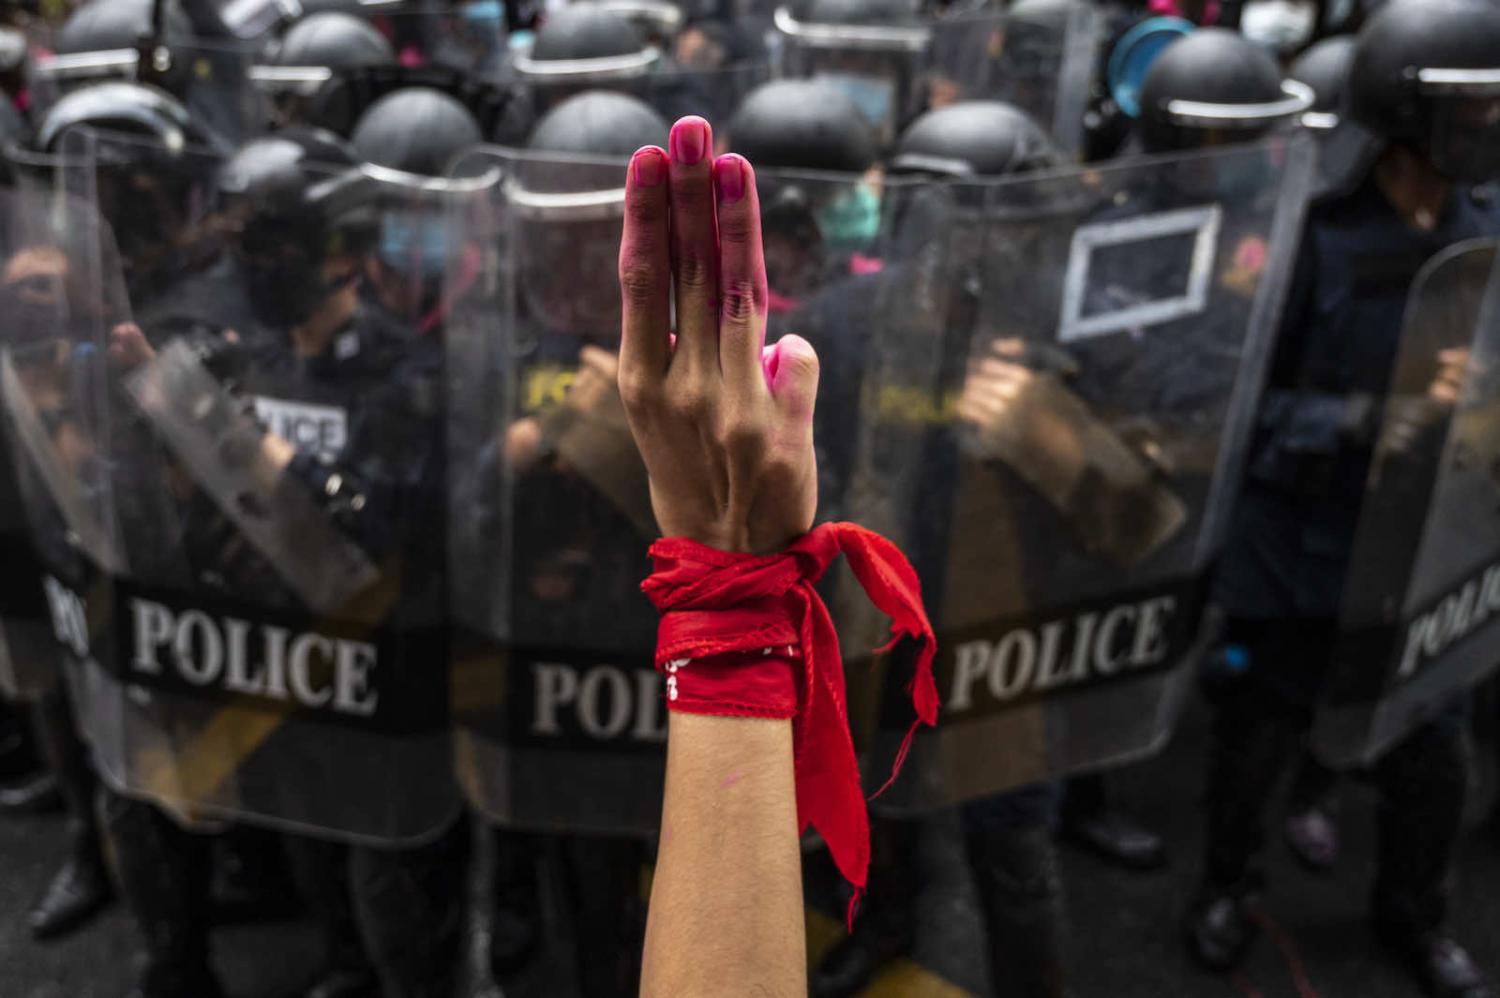 Protests in Bangkok last year (Sirachai Arunrugstichai/Getty Images)